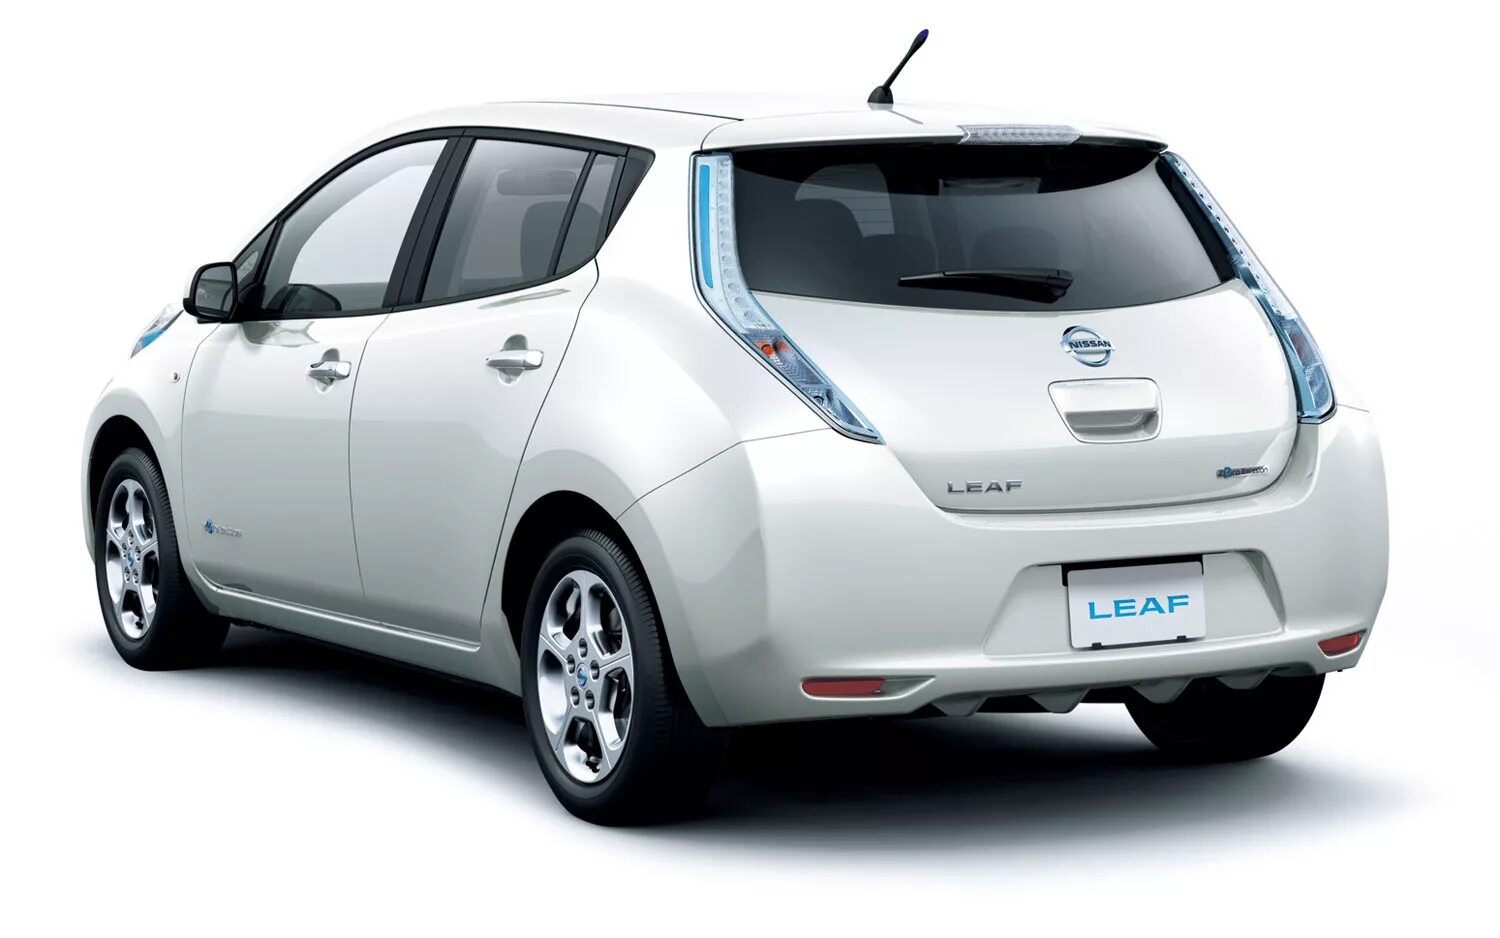 Ниссан Леаф электромобиль. Электрокар Nissan Leaf. Ниссан лиф 2013. Nissan Leaf электромобиль 2014.